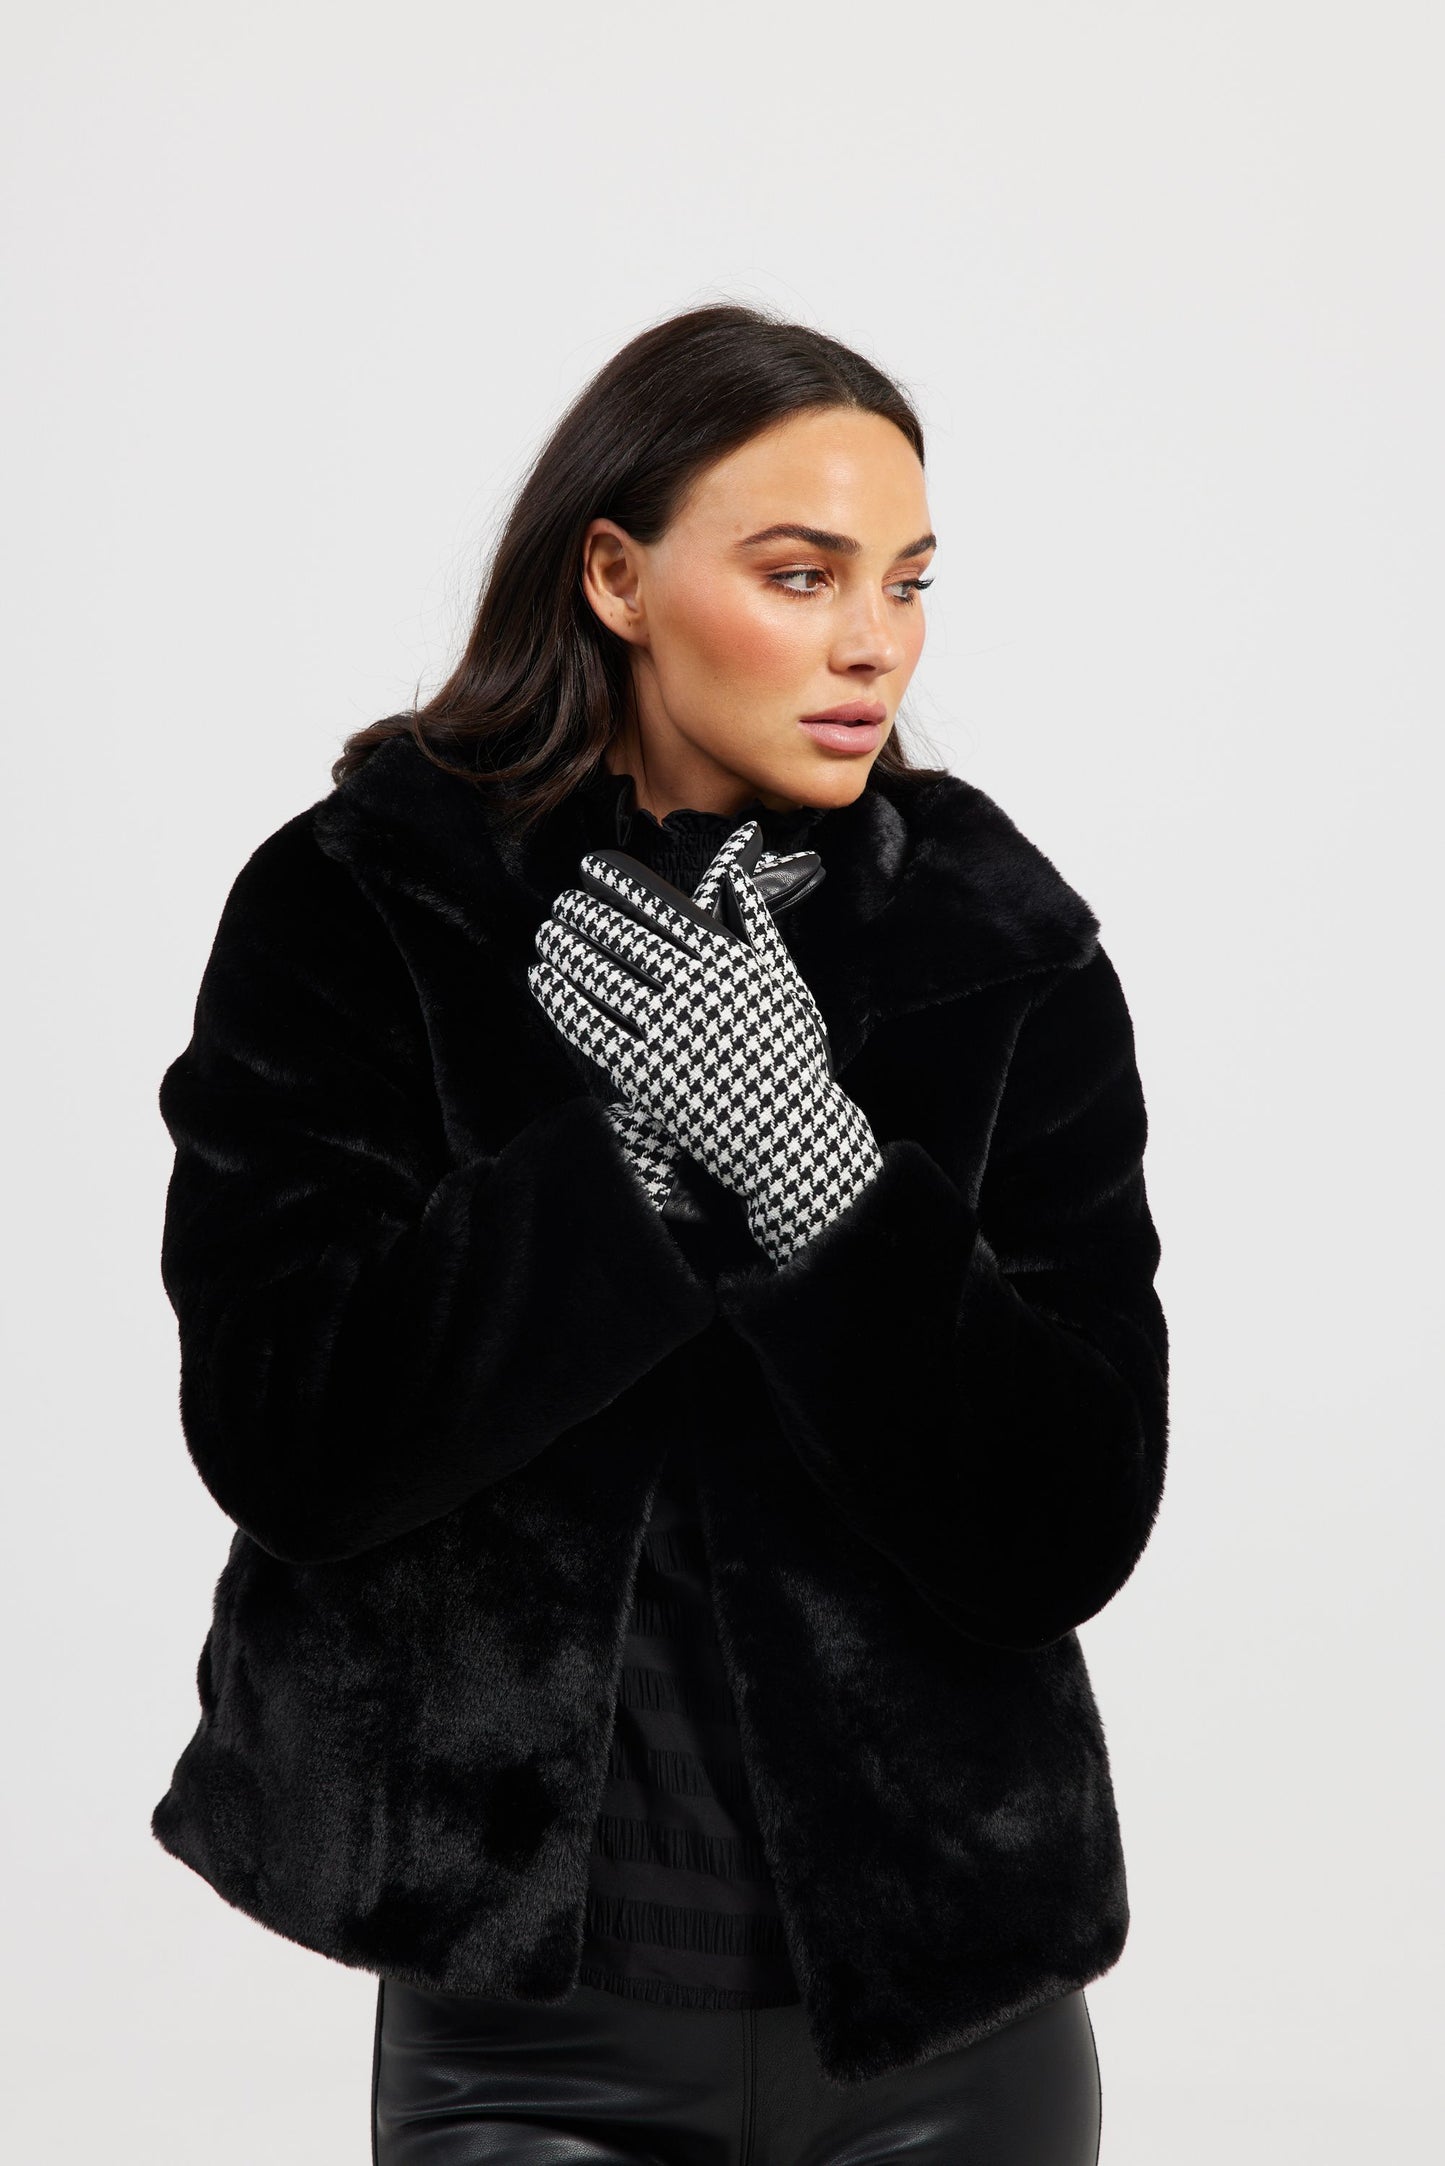 Brave + True Countess Gloves | GL23